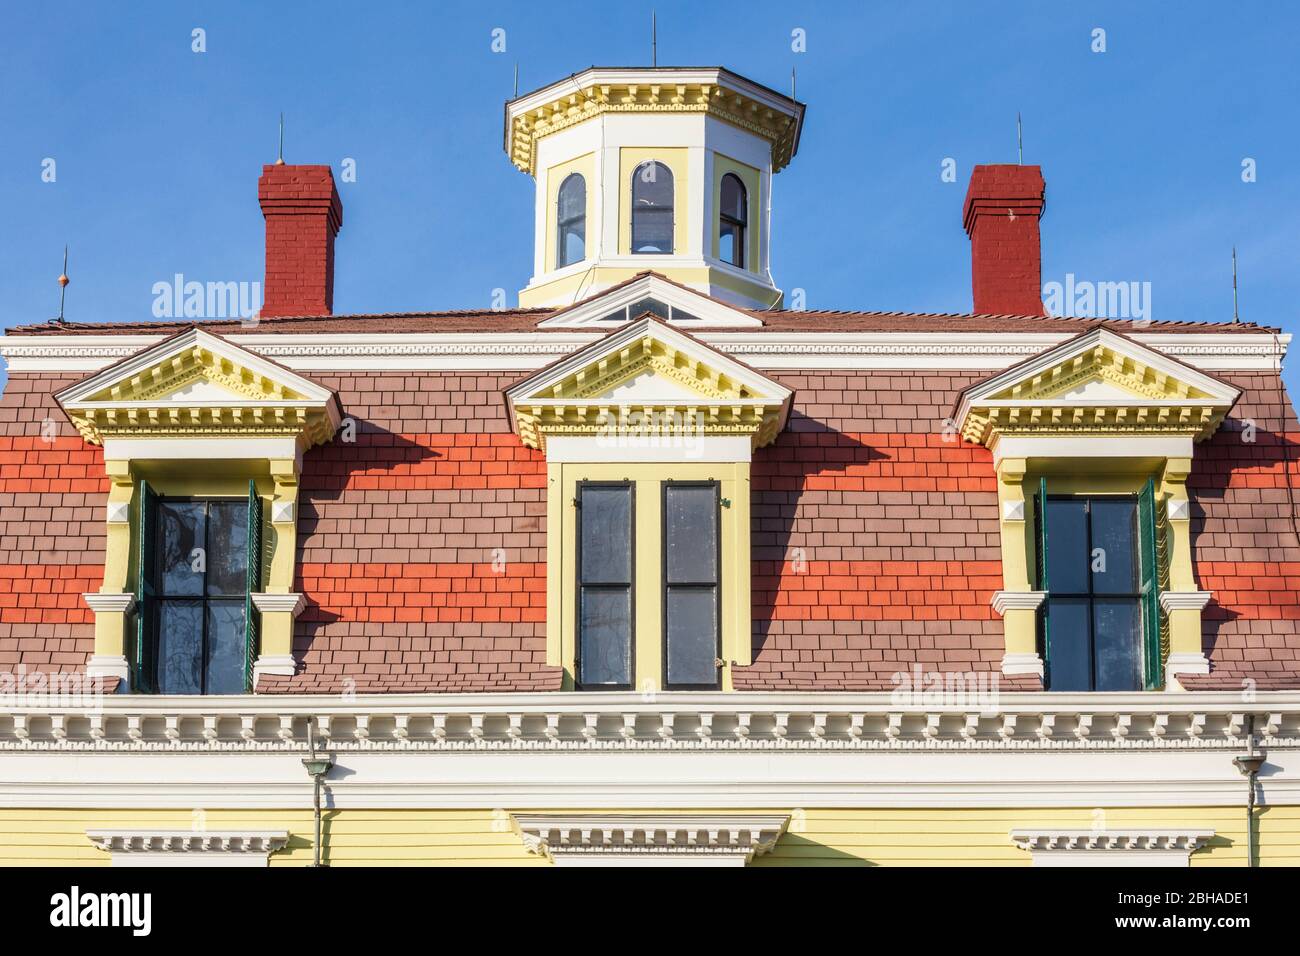 USA, New England, Massachusetts, Cape Cod, Eastham, Fort Hill, Edward Penniman House, fomer sea captain's home, built in 1868 Stock Photo